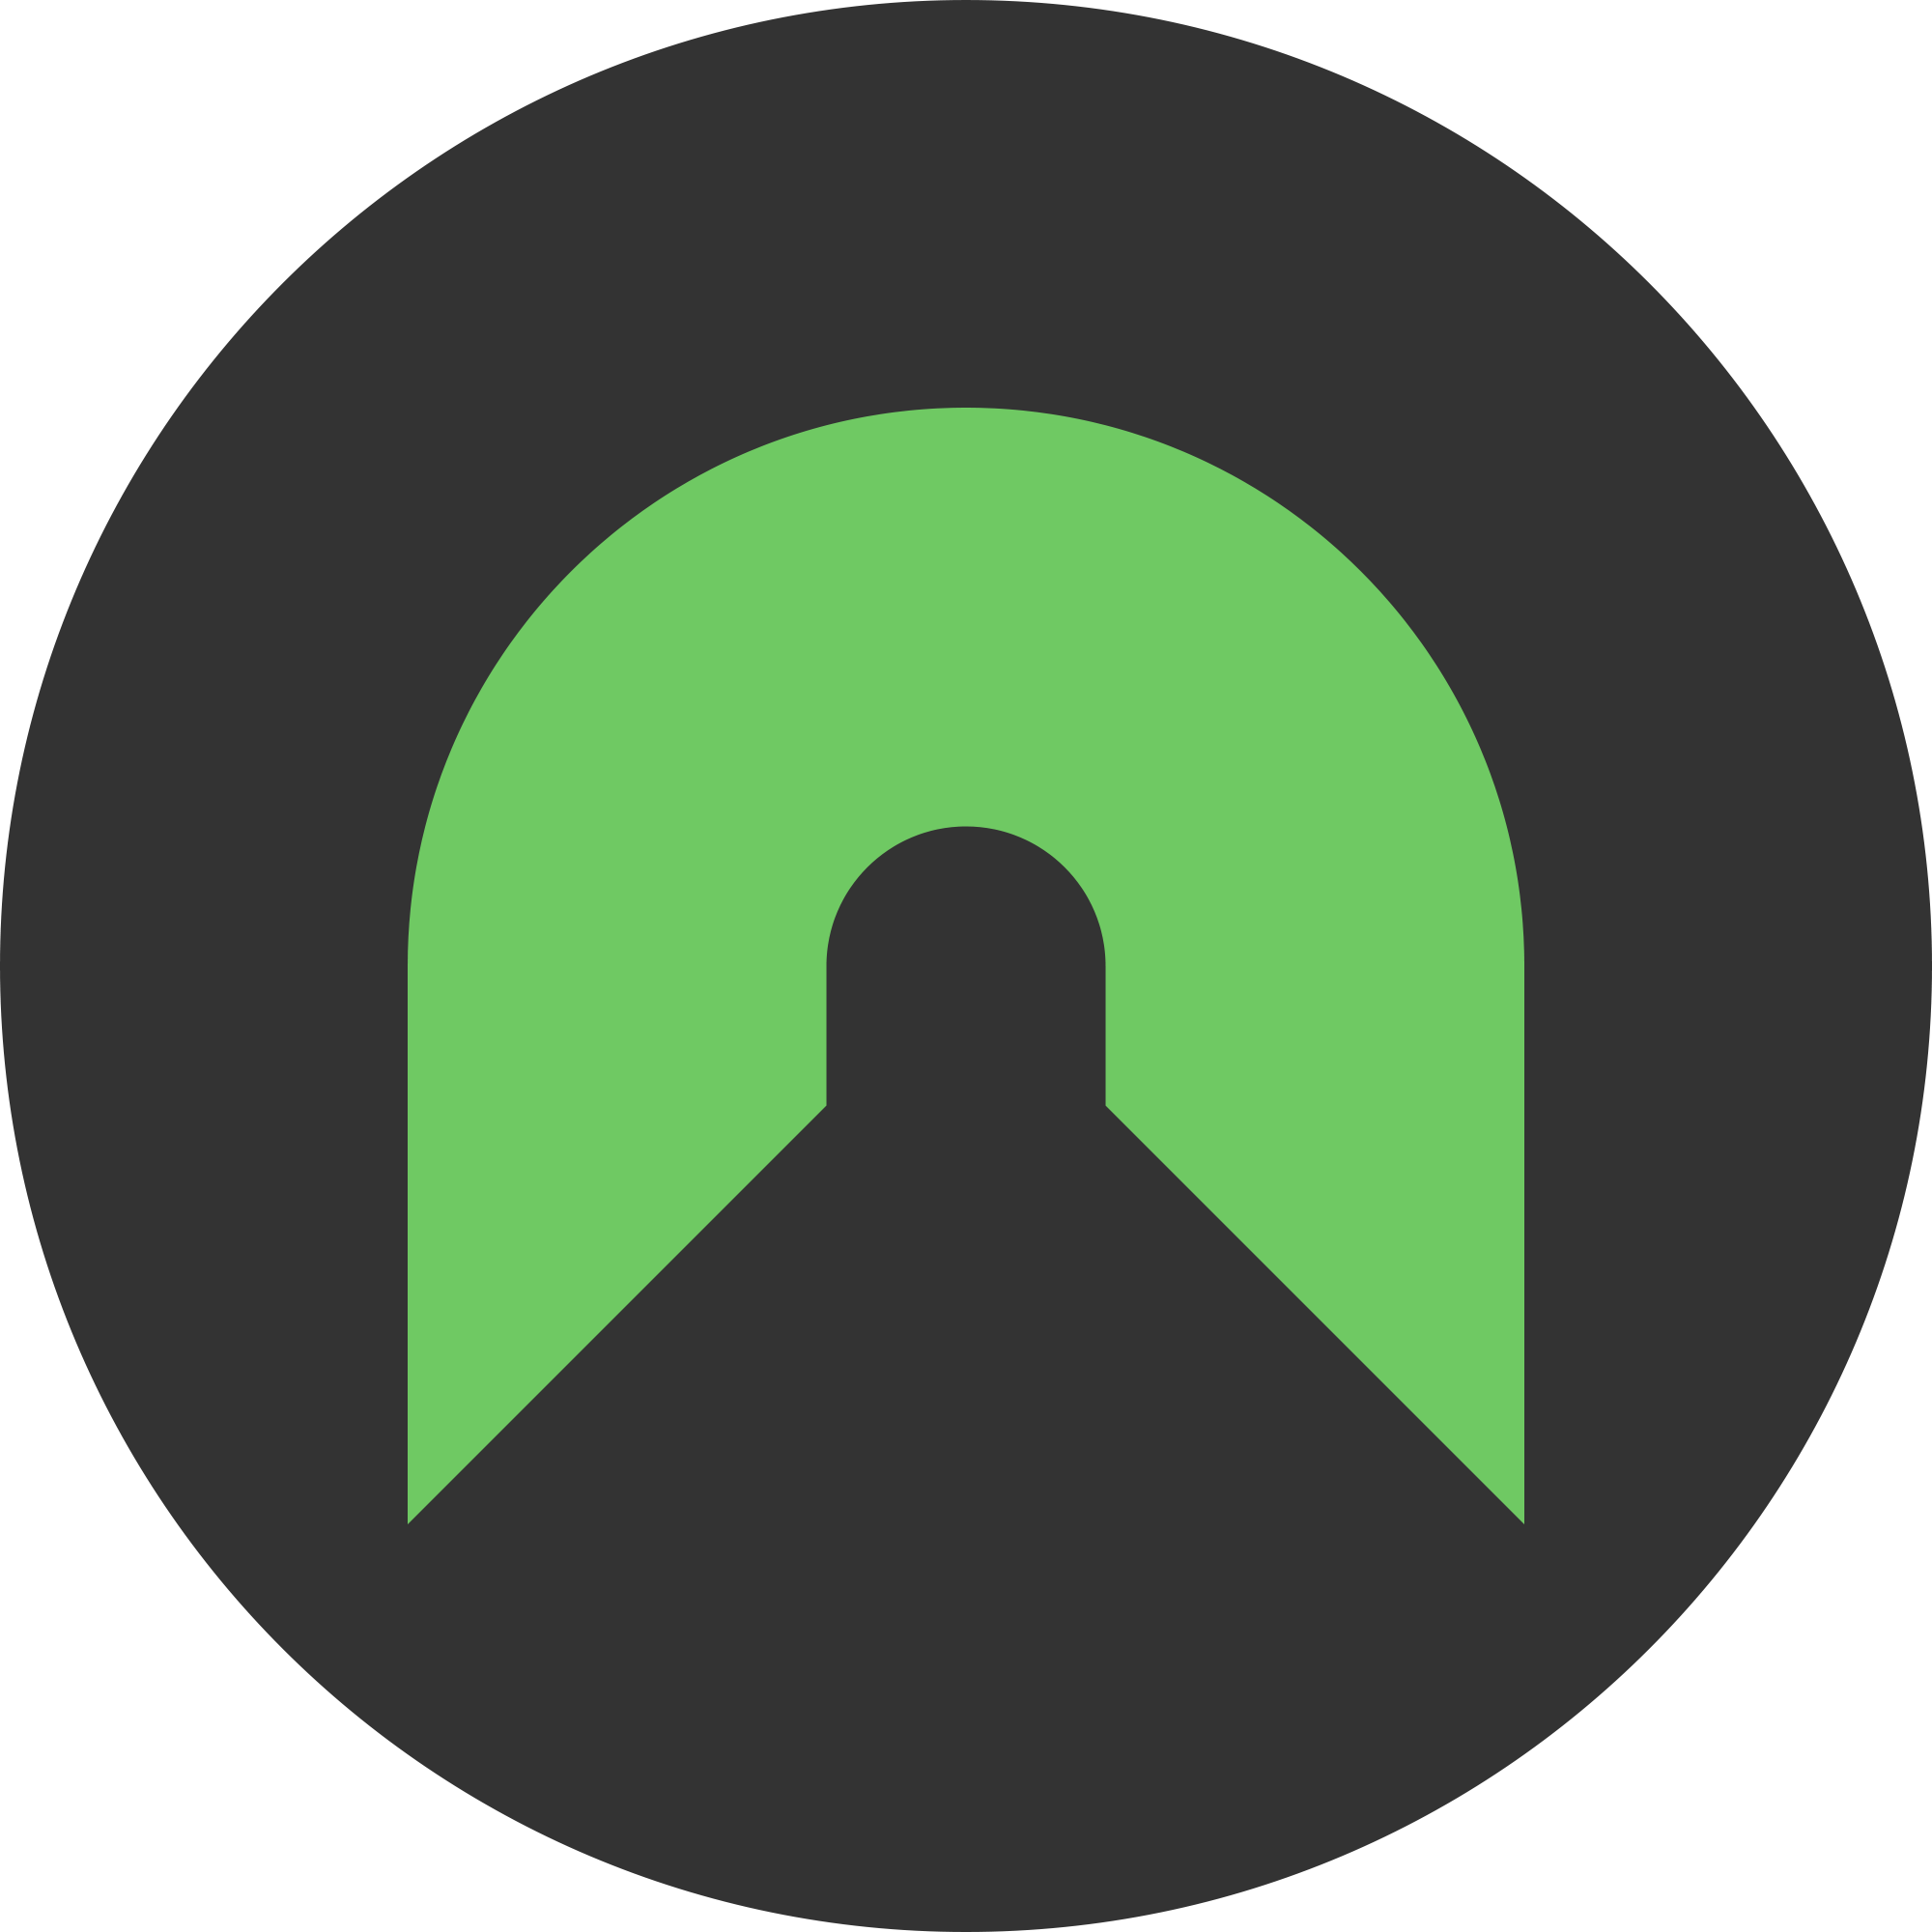 green tunnel logo